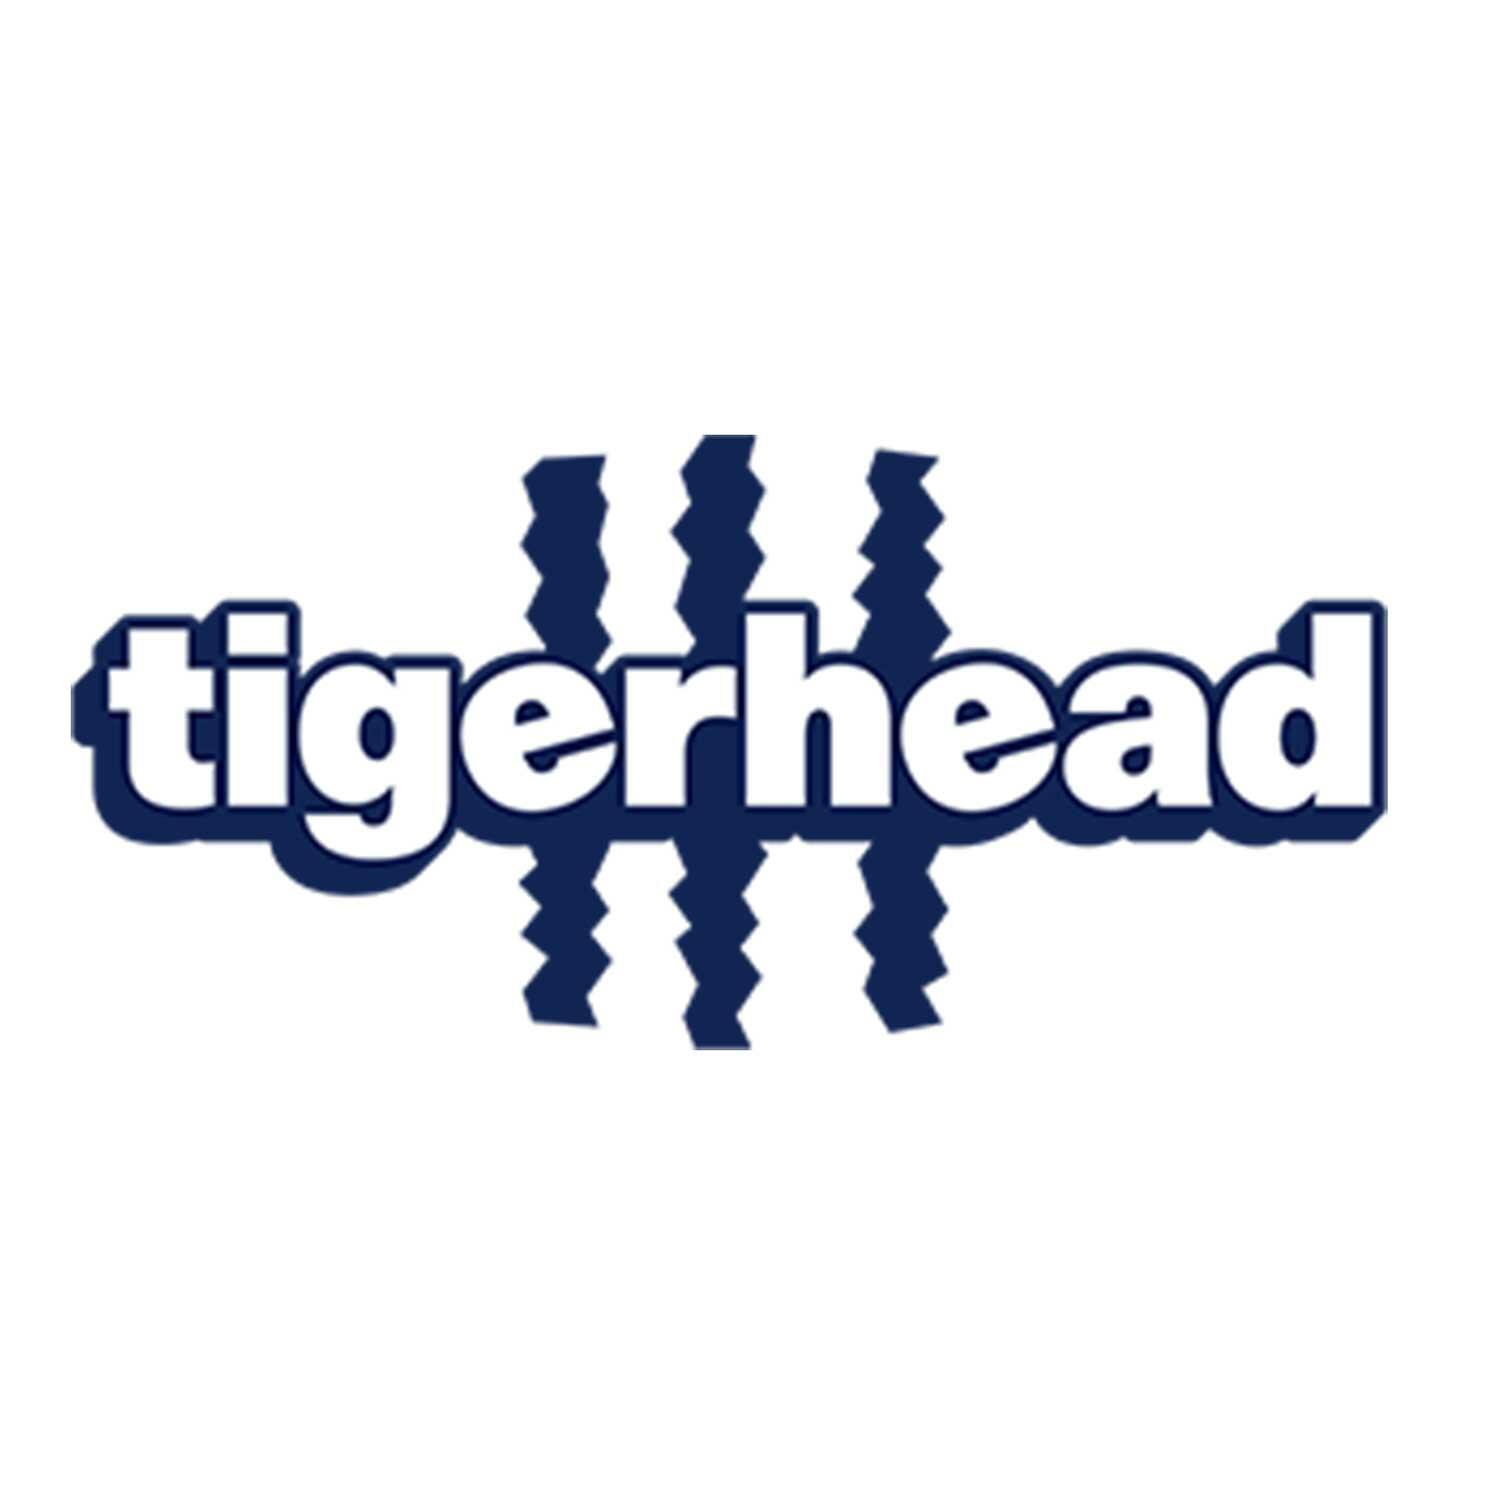 tigerhead-shopwired.jpg